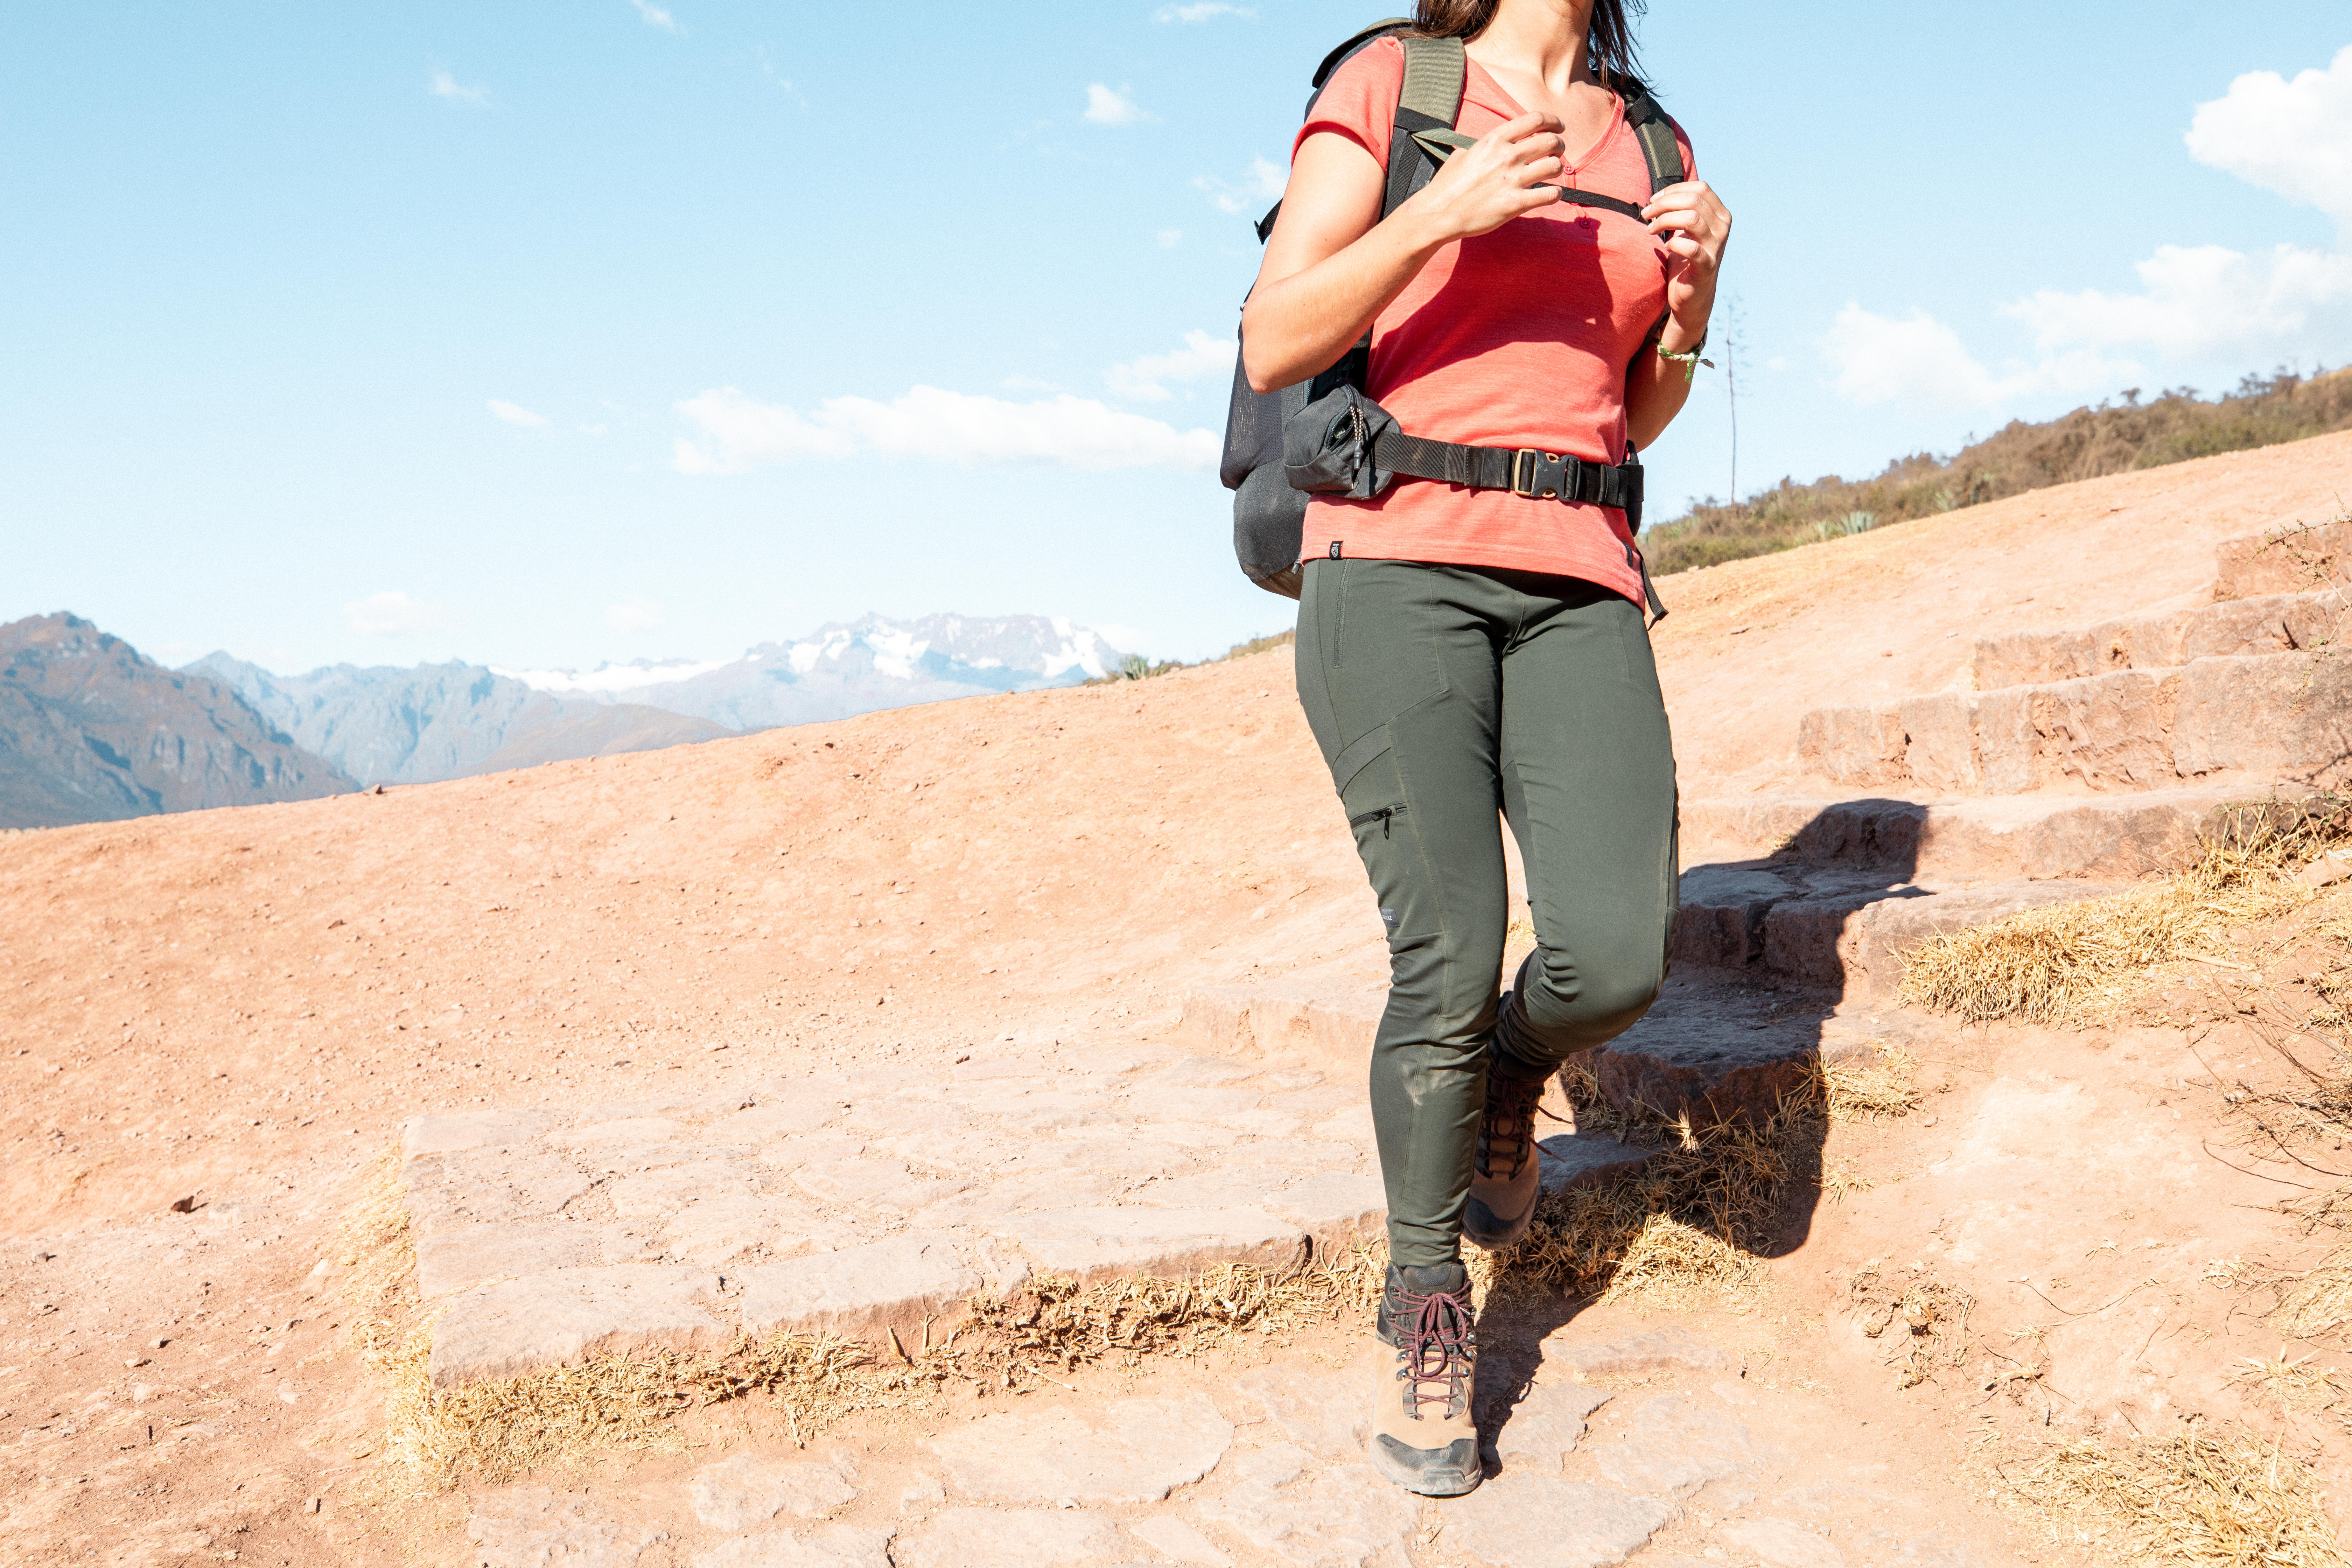 Women's Hike™ Hiking Legging